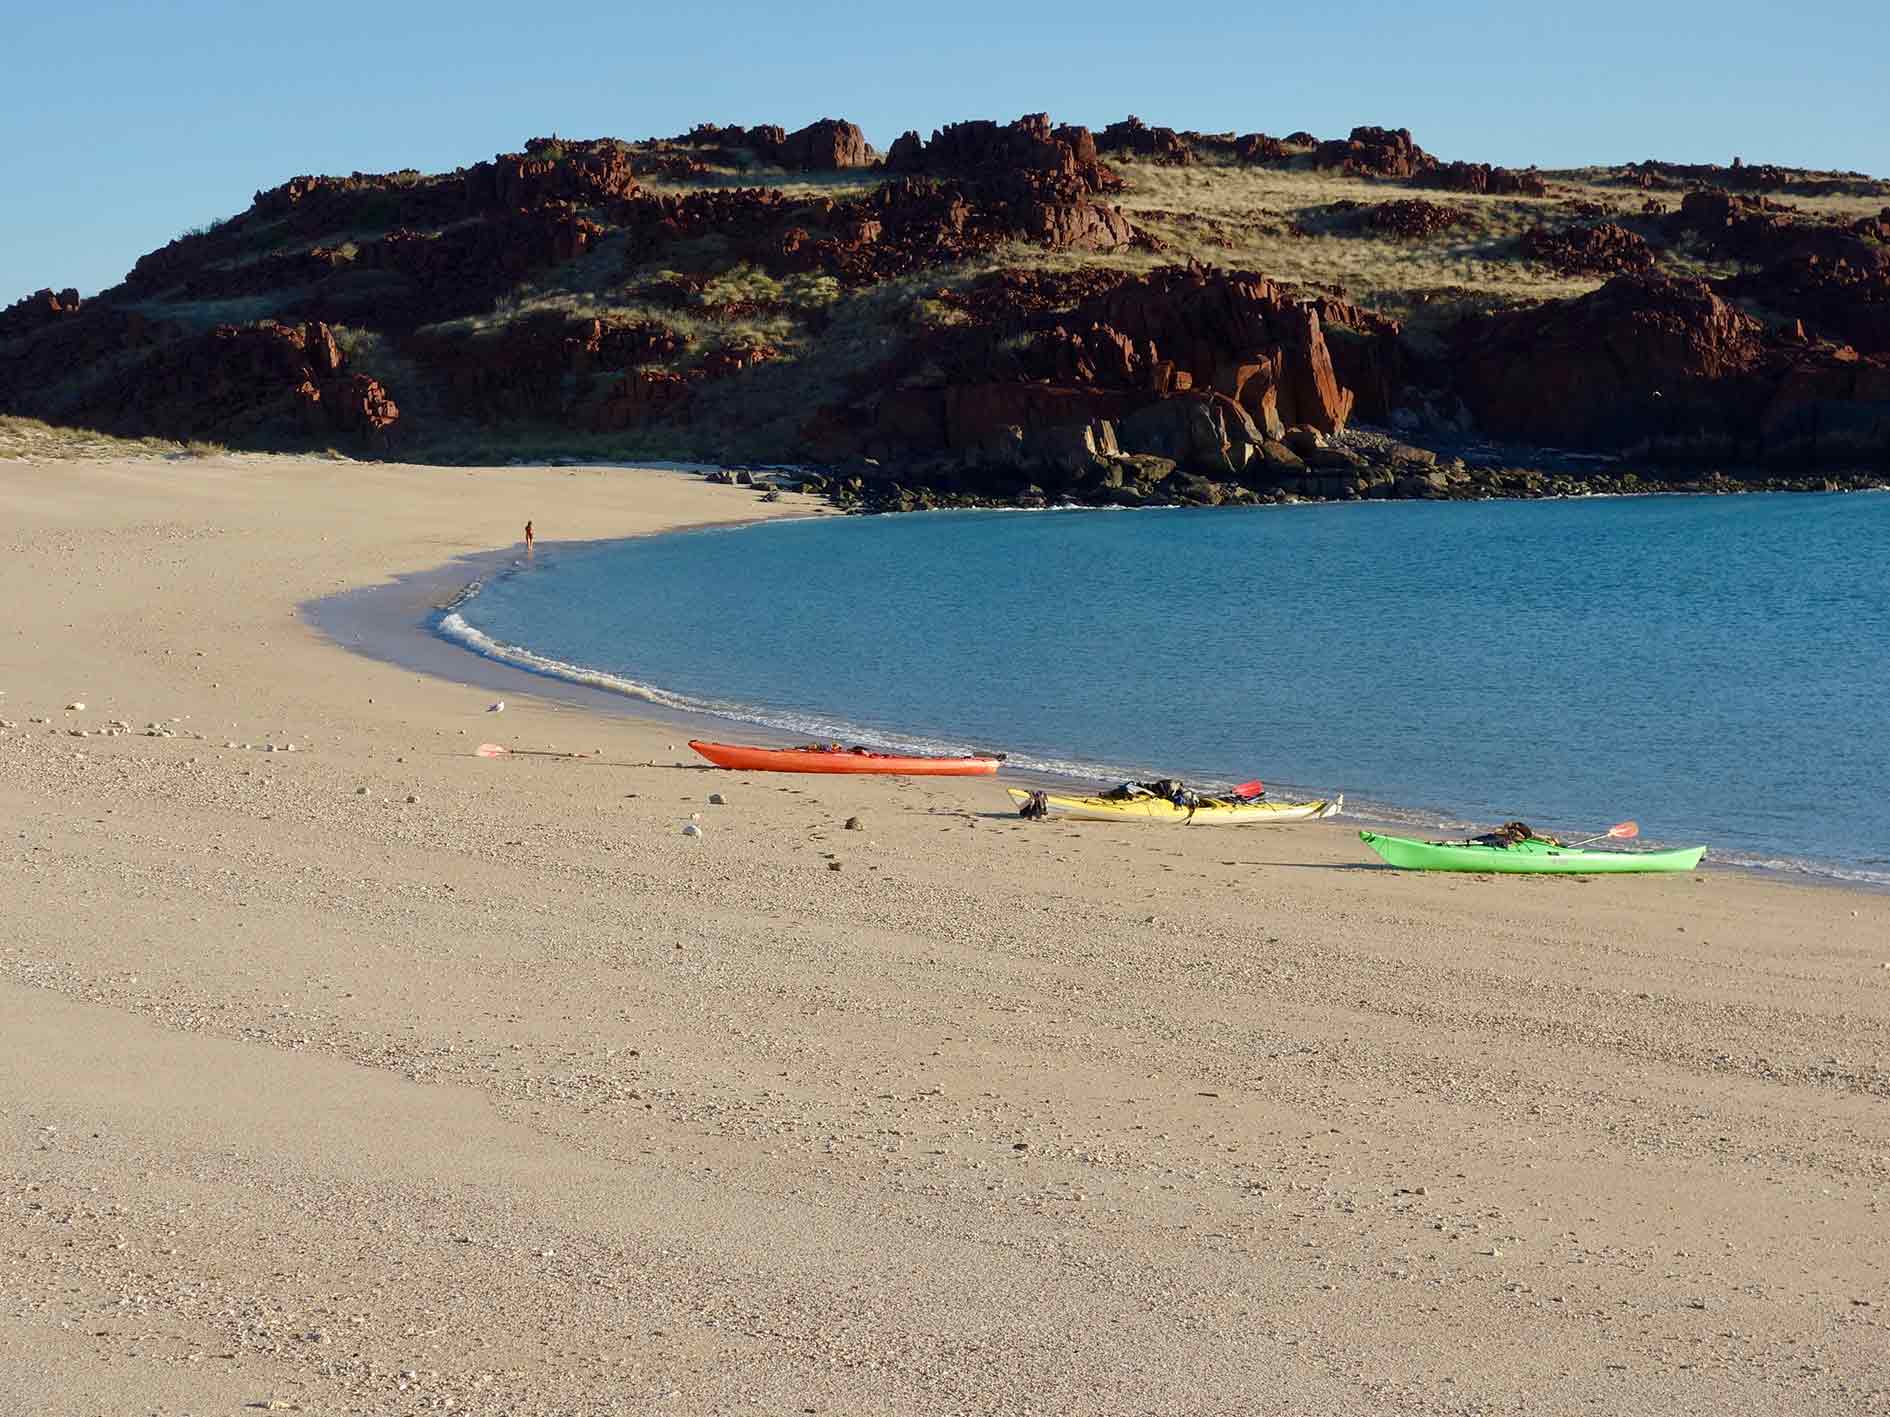 Kayaks on a beach, Dampier Archipelago